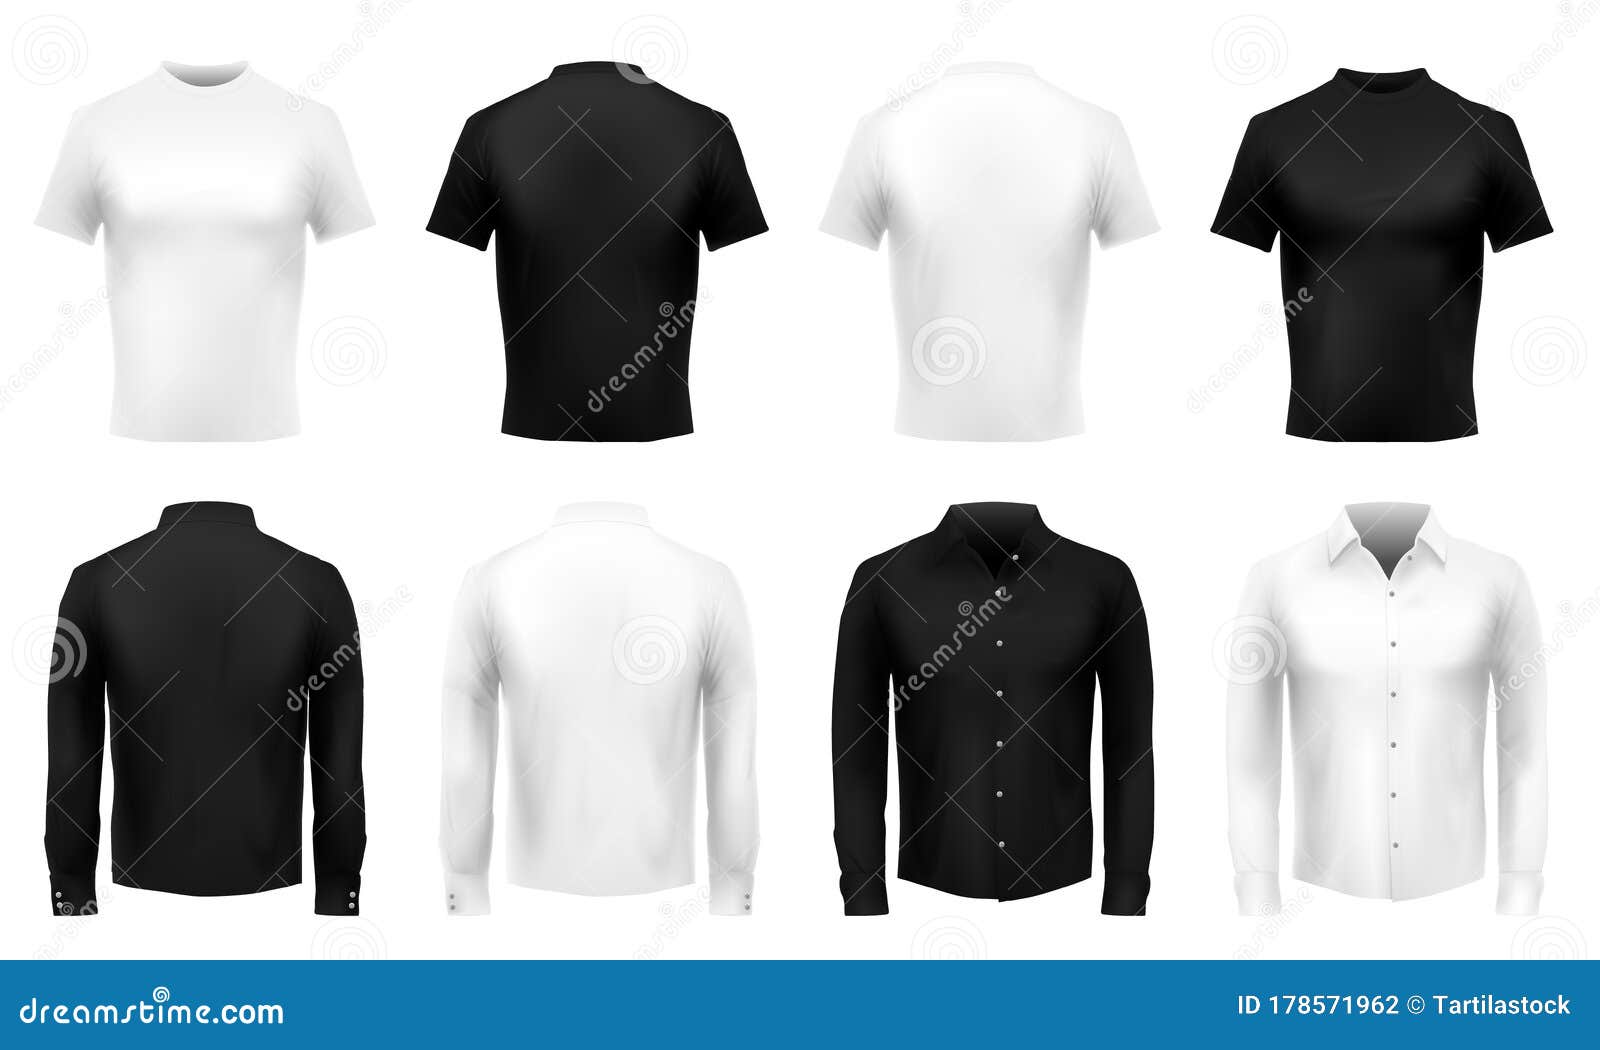 Download Realistic T-shirt And Shirt Mockup. Formal Male Uniform ...